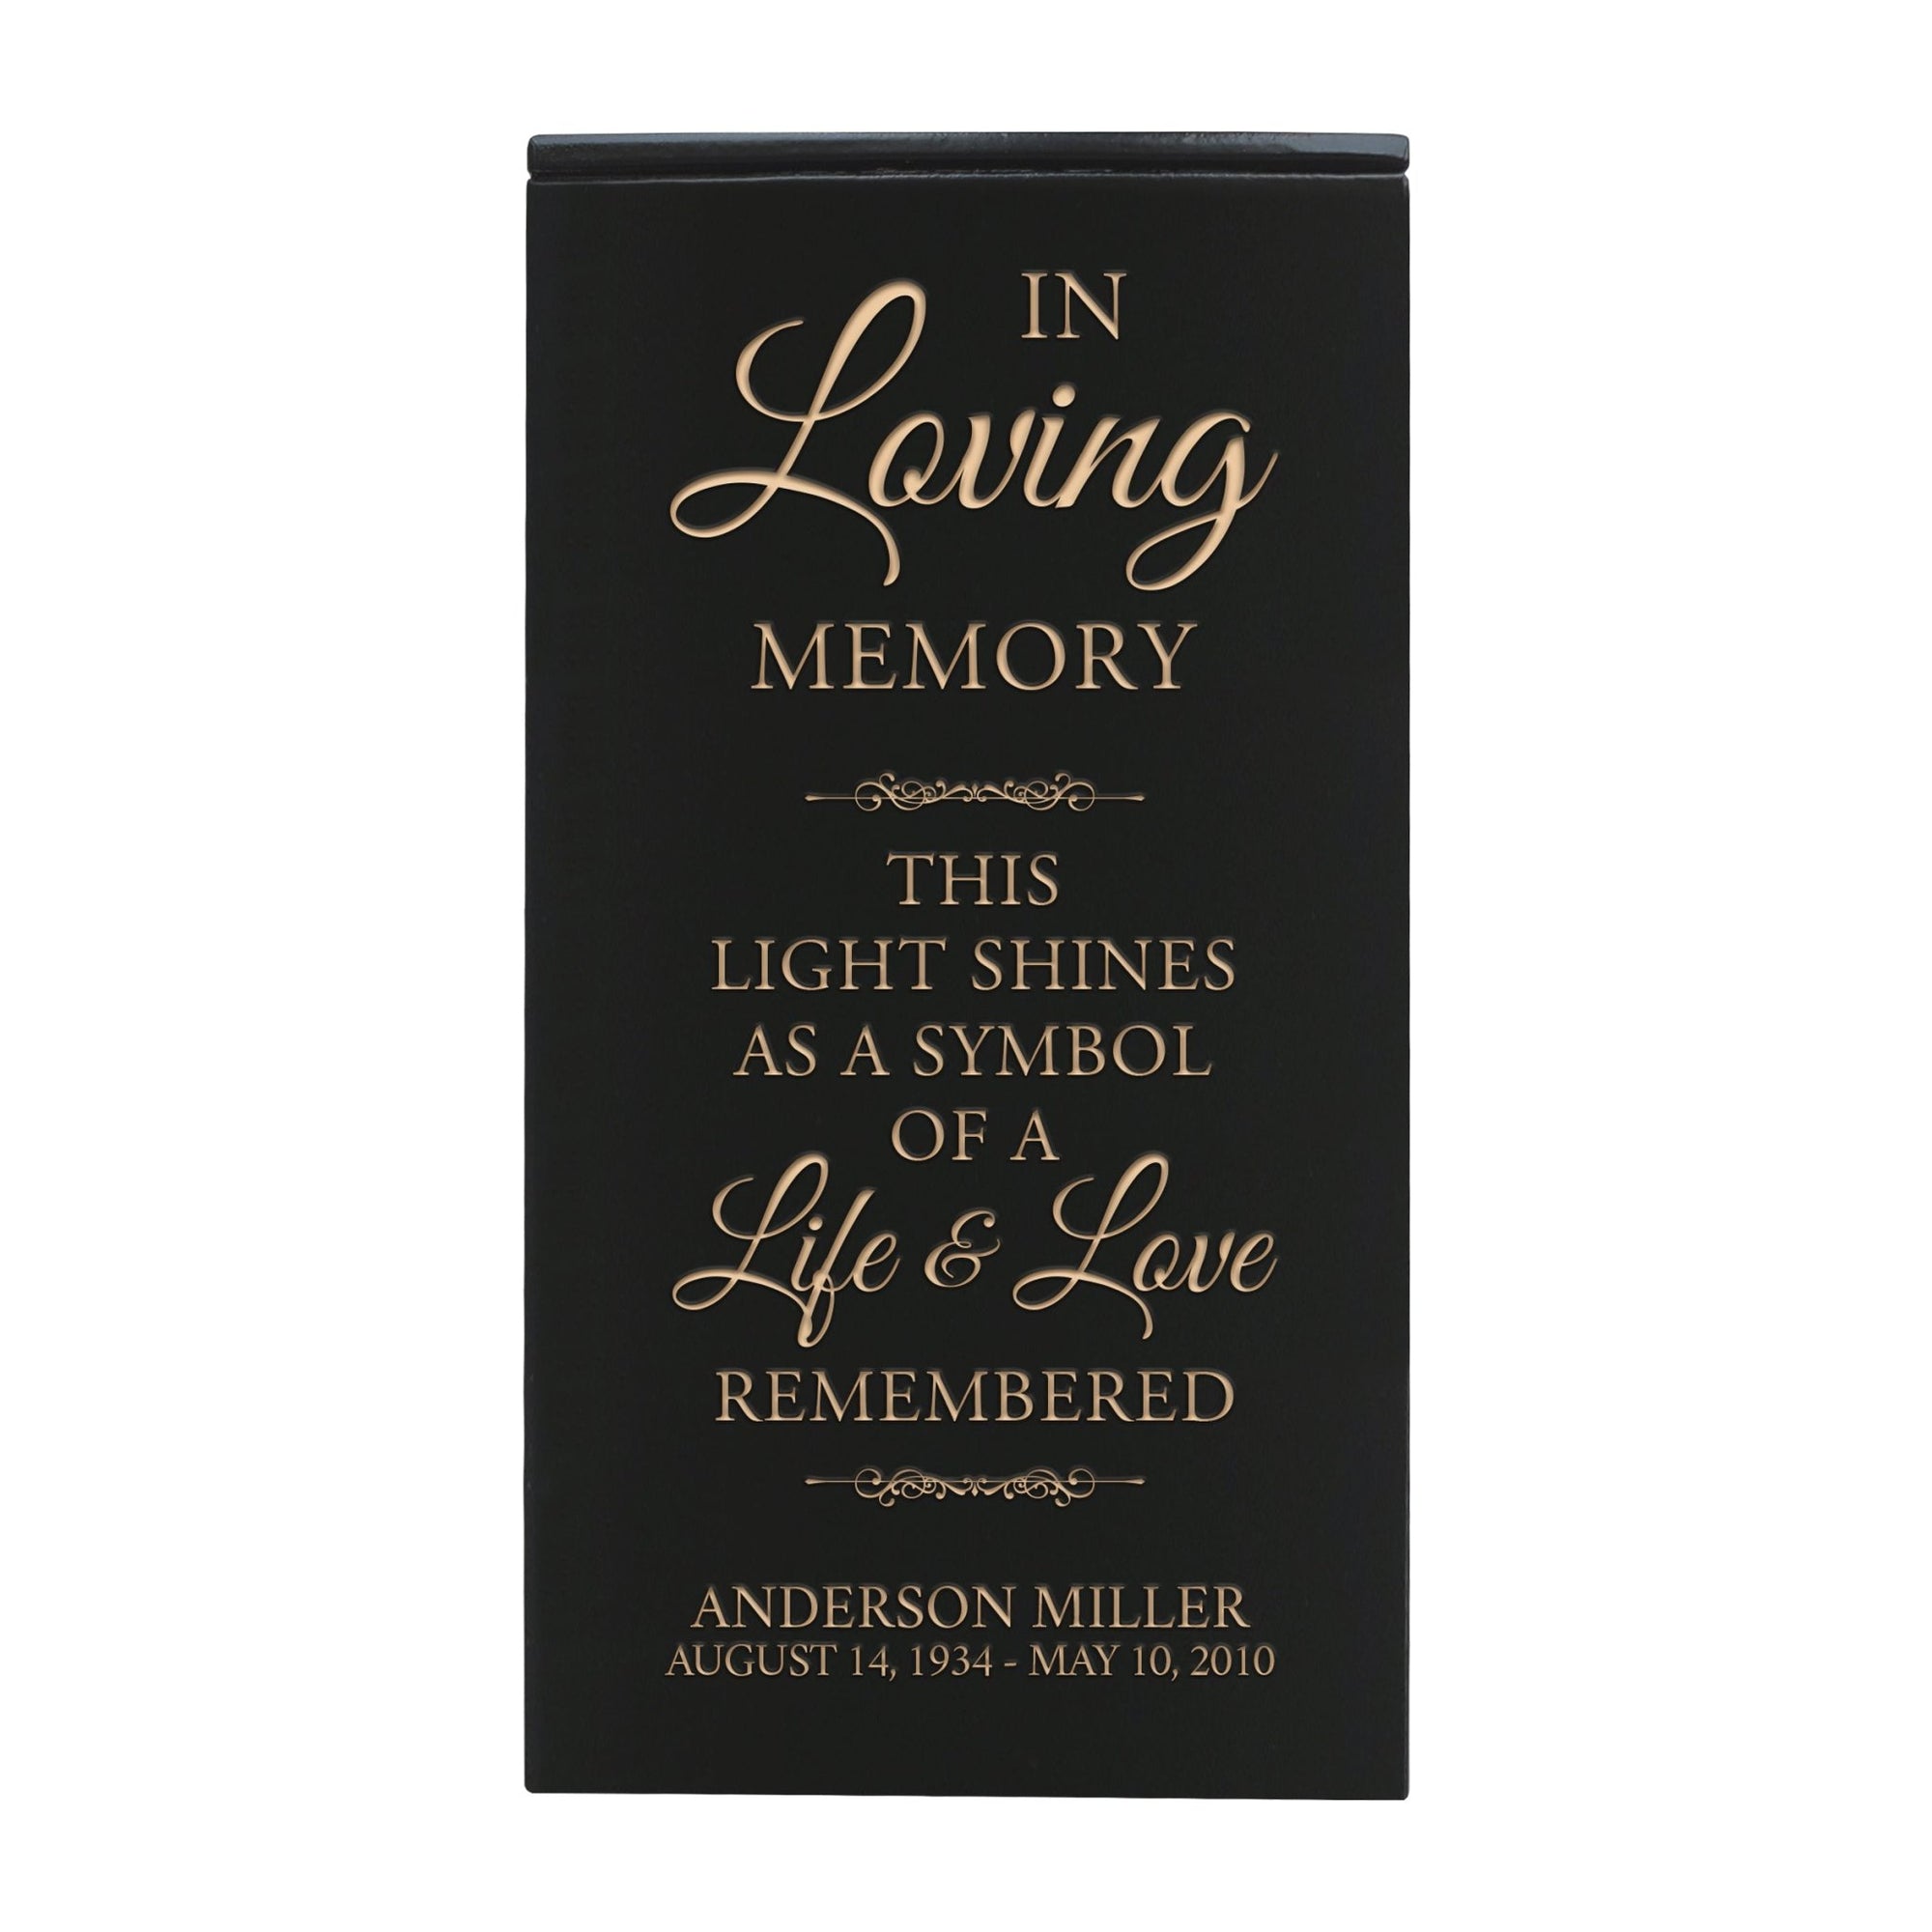 Custom Engraved Memorial Keepsake Urn Box holds 100 cu in of Ashes In Loving Memory - This Light Shines - LifeSong Milestones